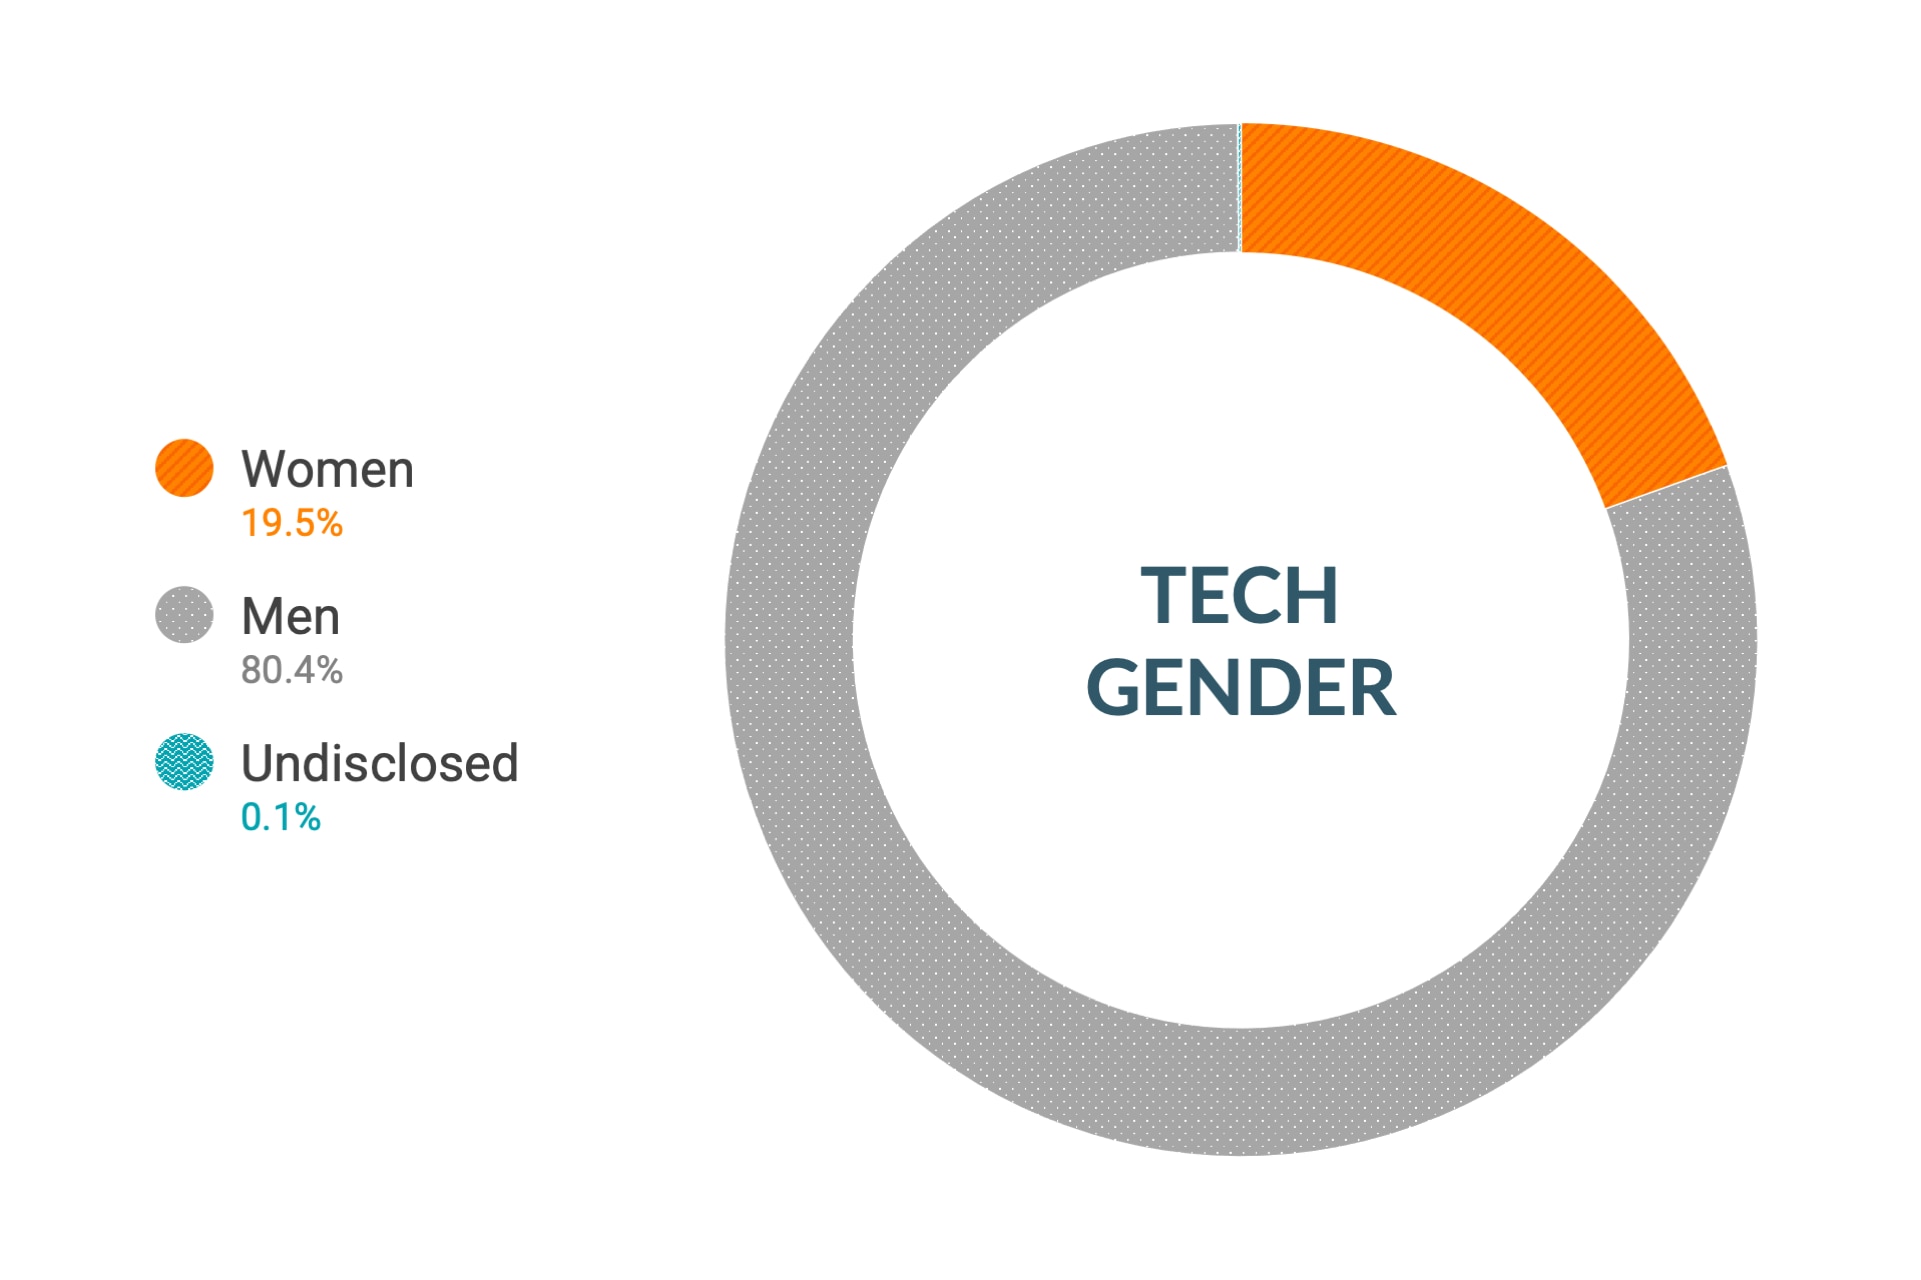 Dati su diversità e inclusione per genere nei ruoli tecnici e ingegneristici globali di Cloudera: donne 12%, uomini 88%